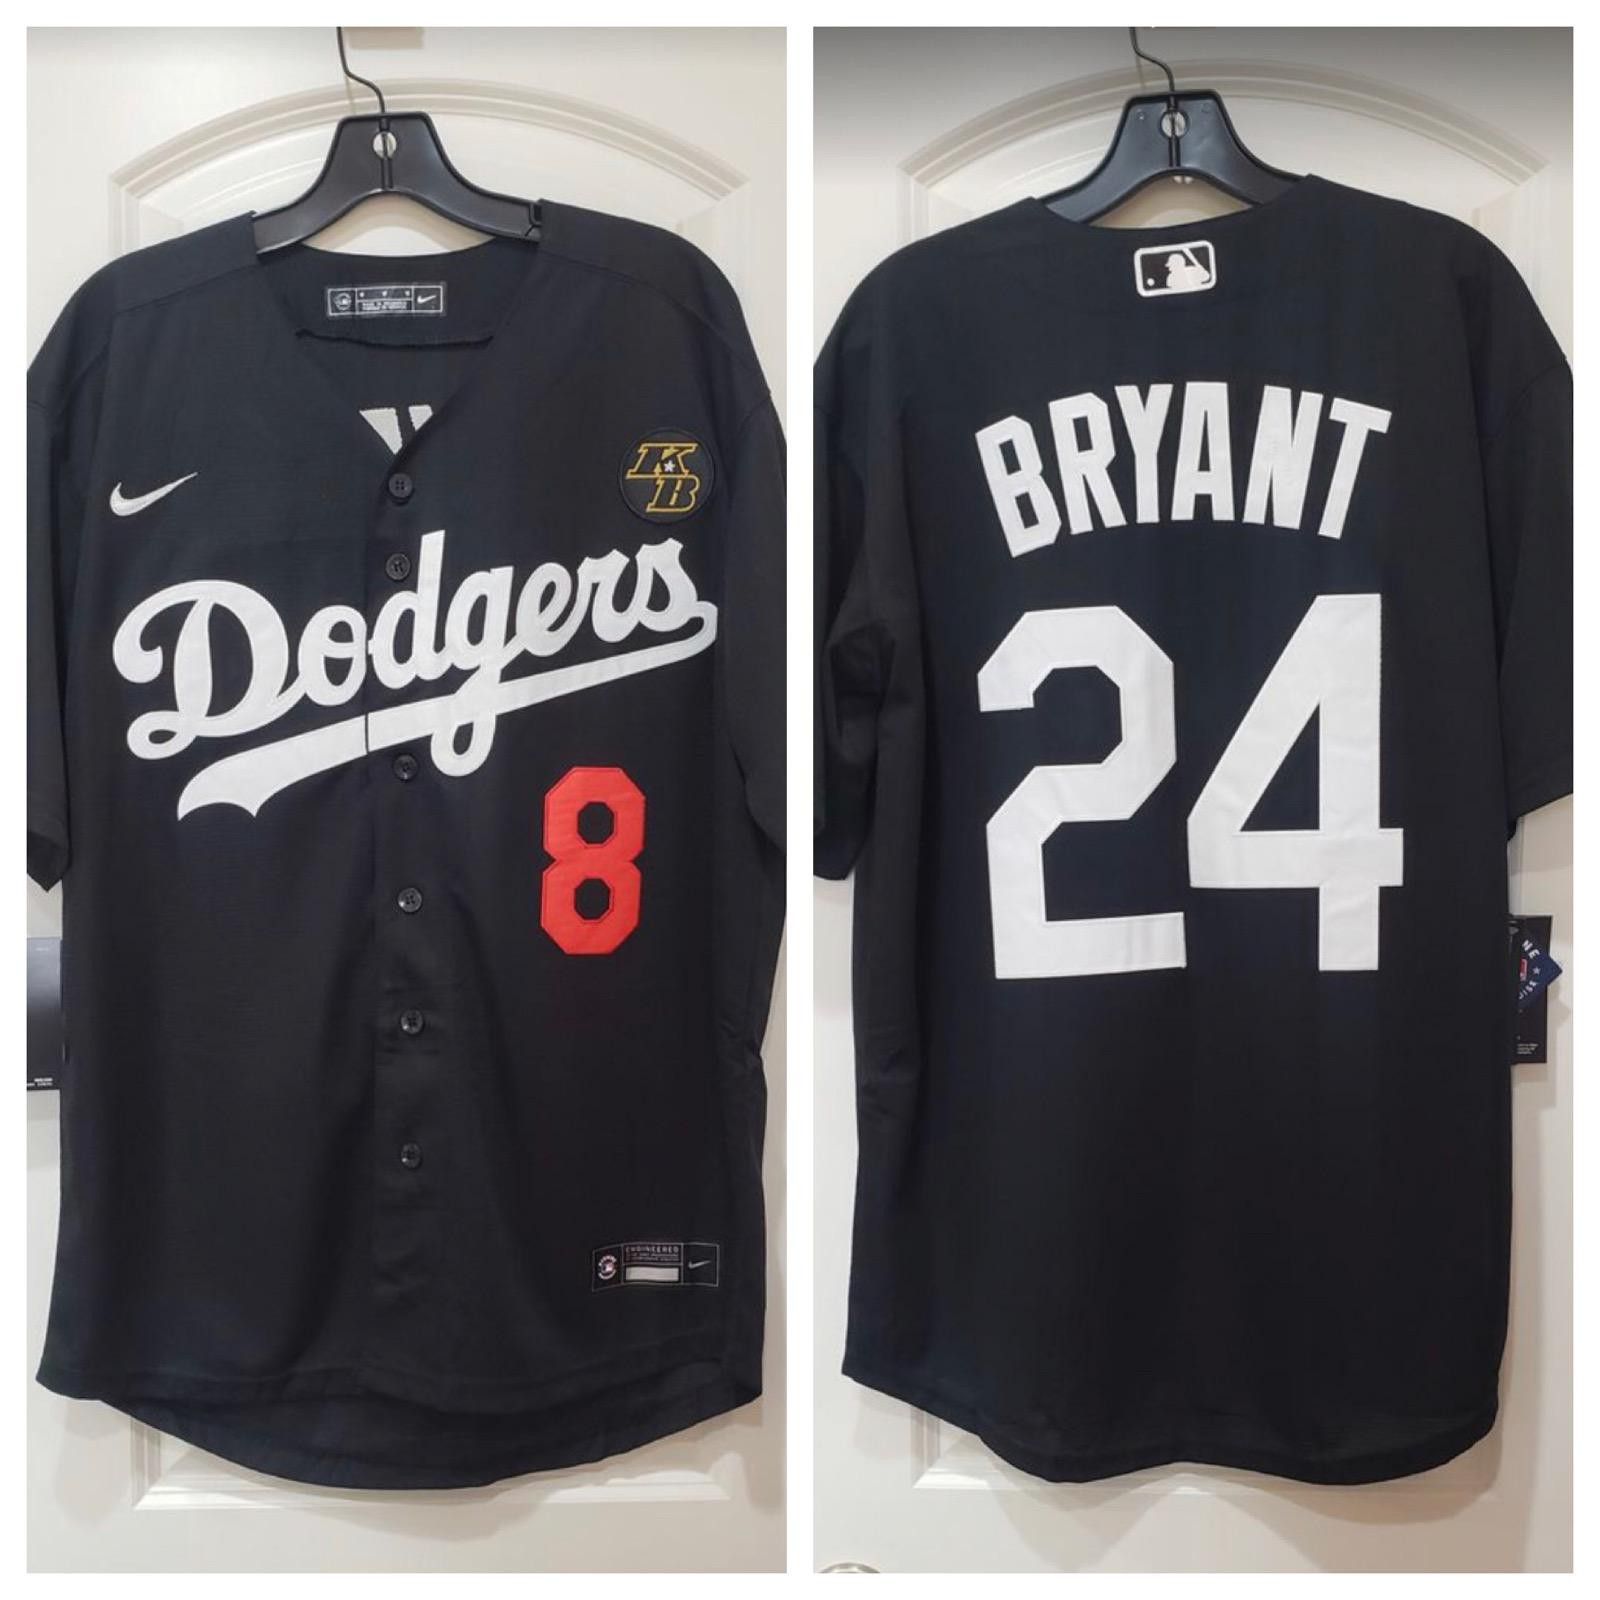 Dodgers to give away Kobe Bryant 'Black Mamba' jerseys - ABC7 Los